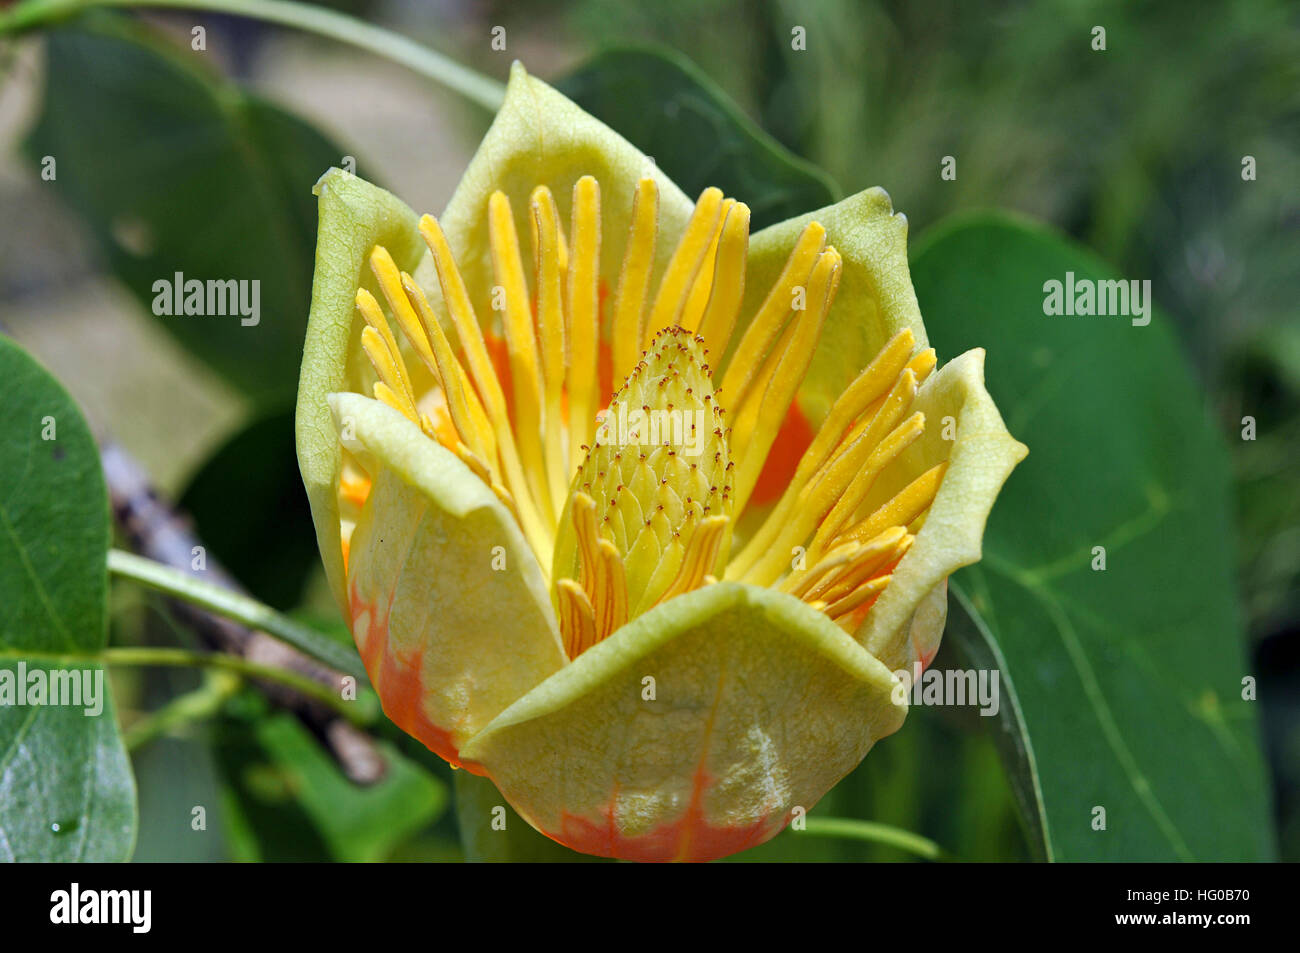 Flower of the tulip tree Stock Photo